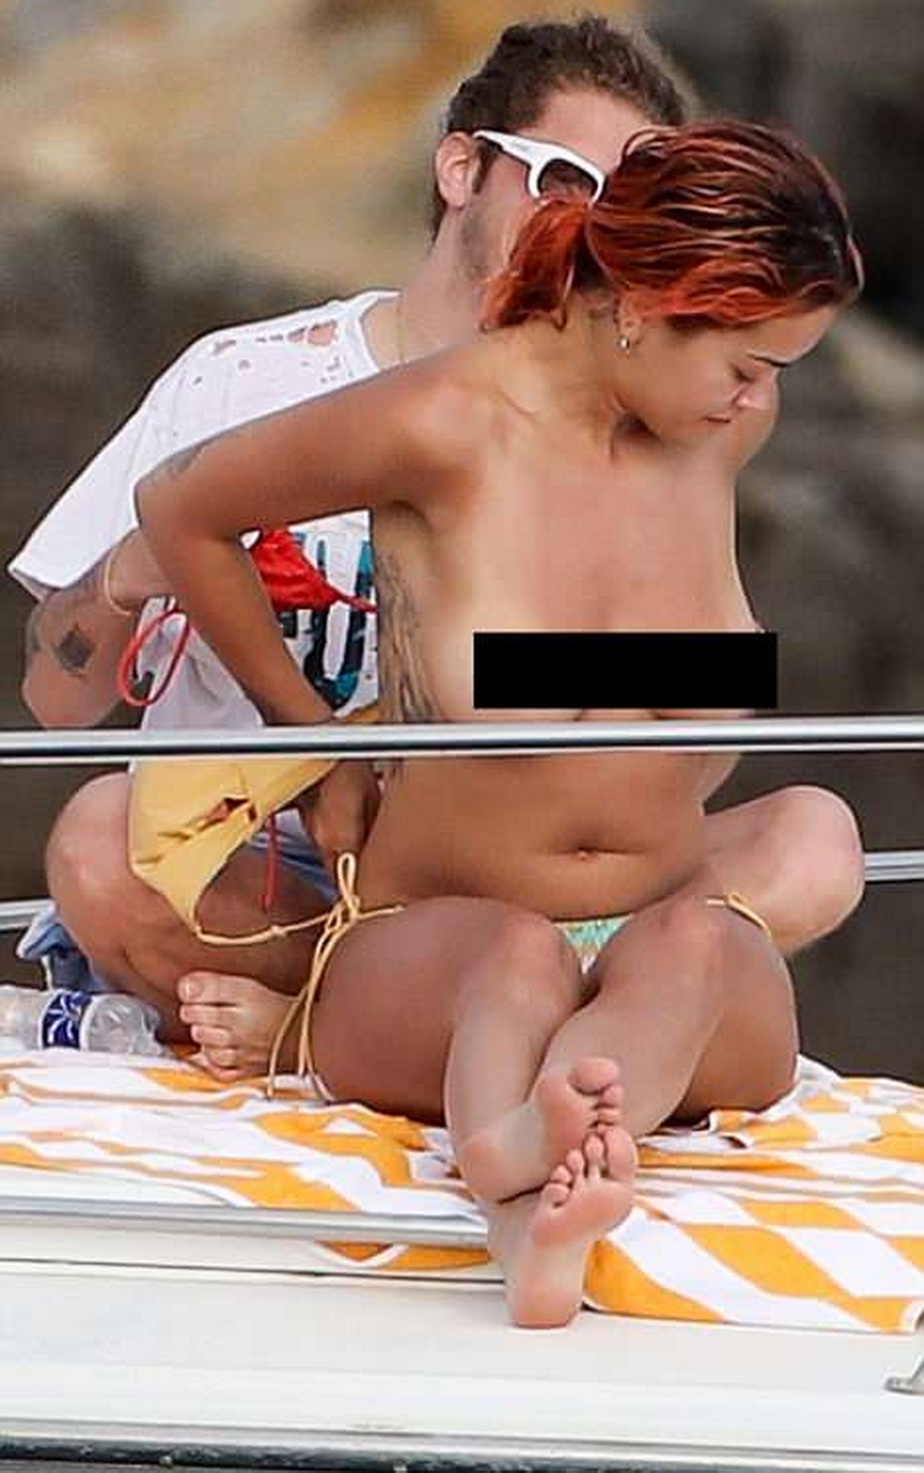 GALERIE FOTO Fotografii incendiare cu Rita Ora! Paparazzi au surprins-o în sânii goi!